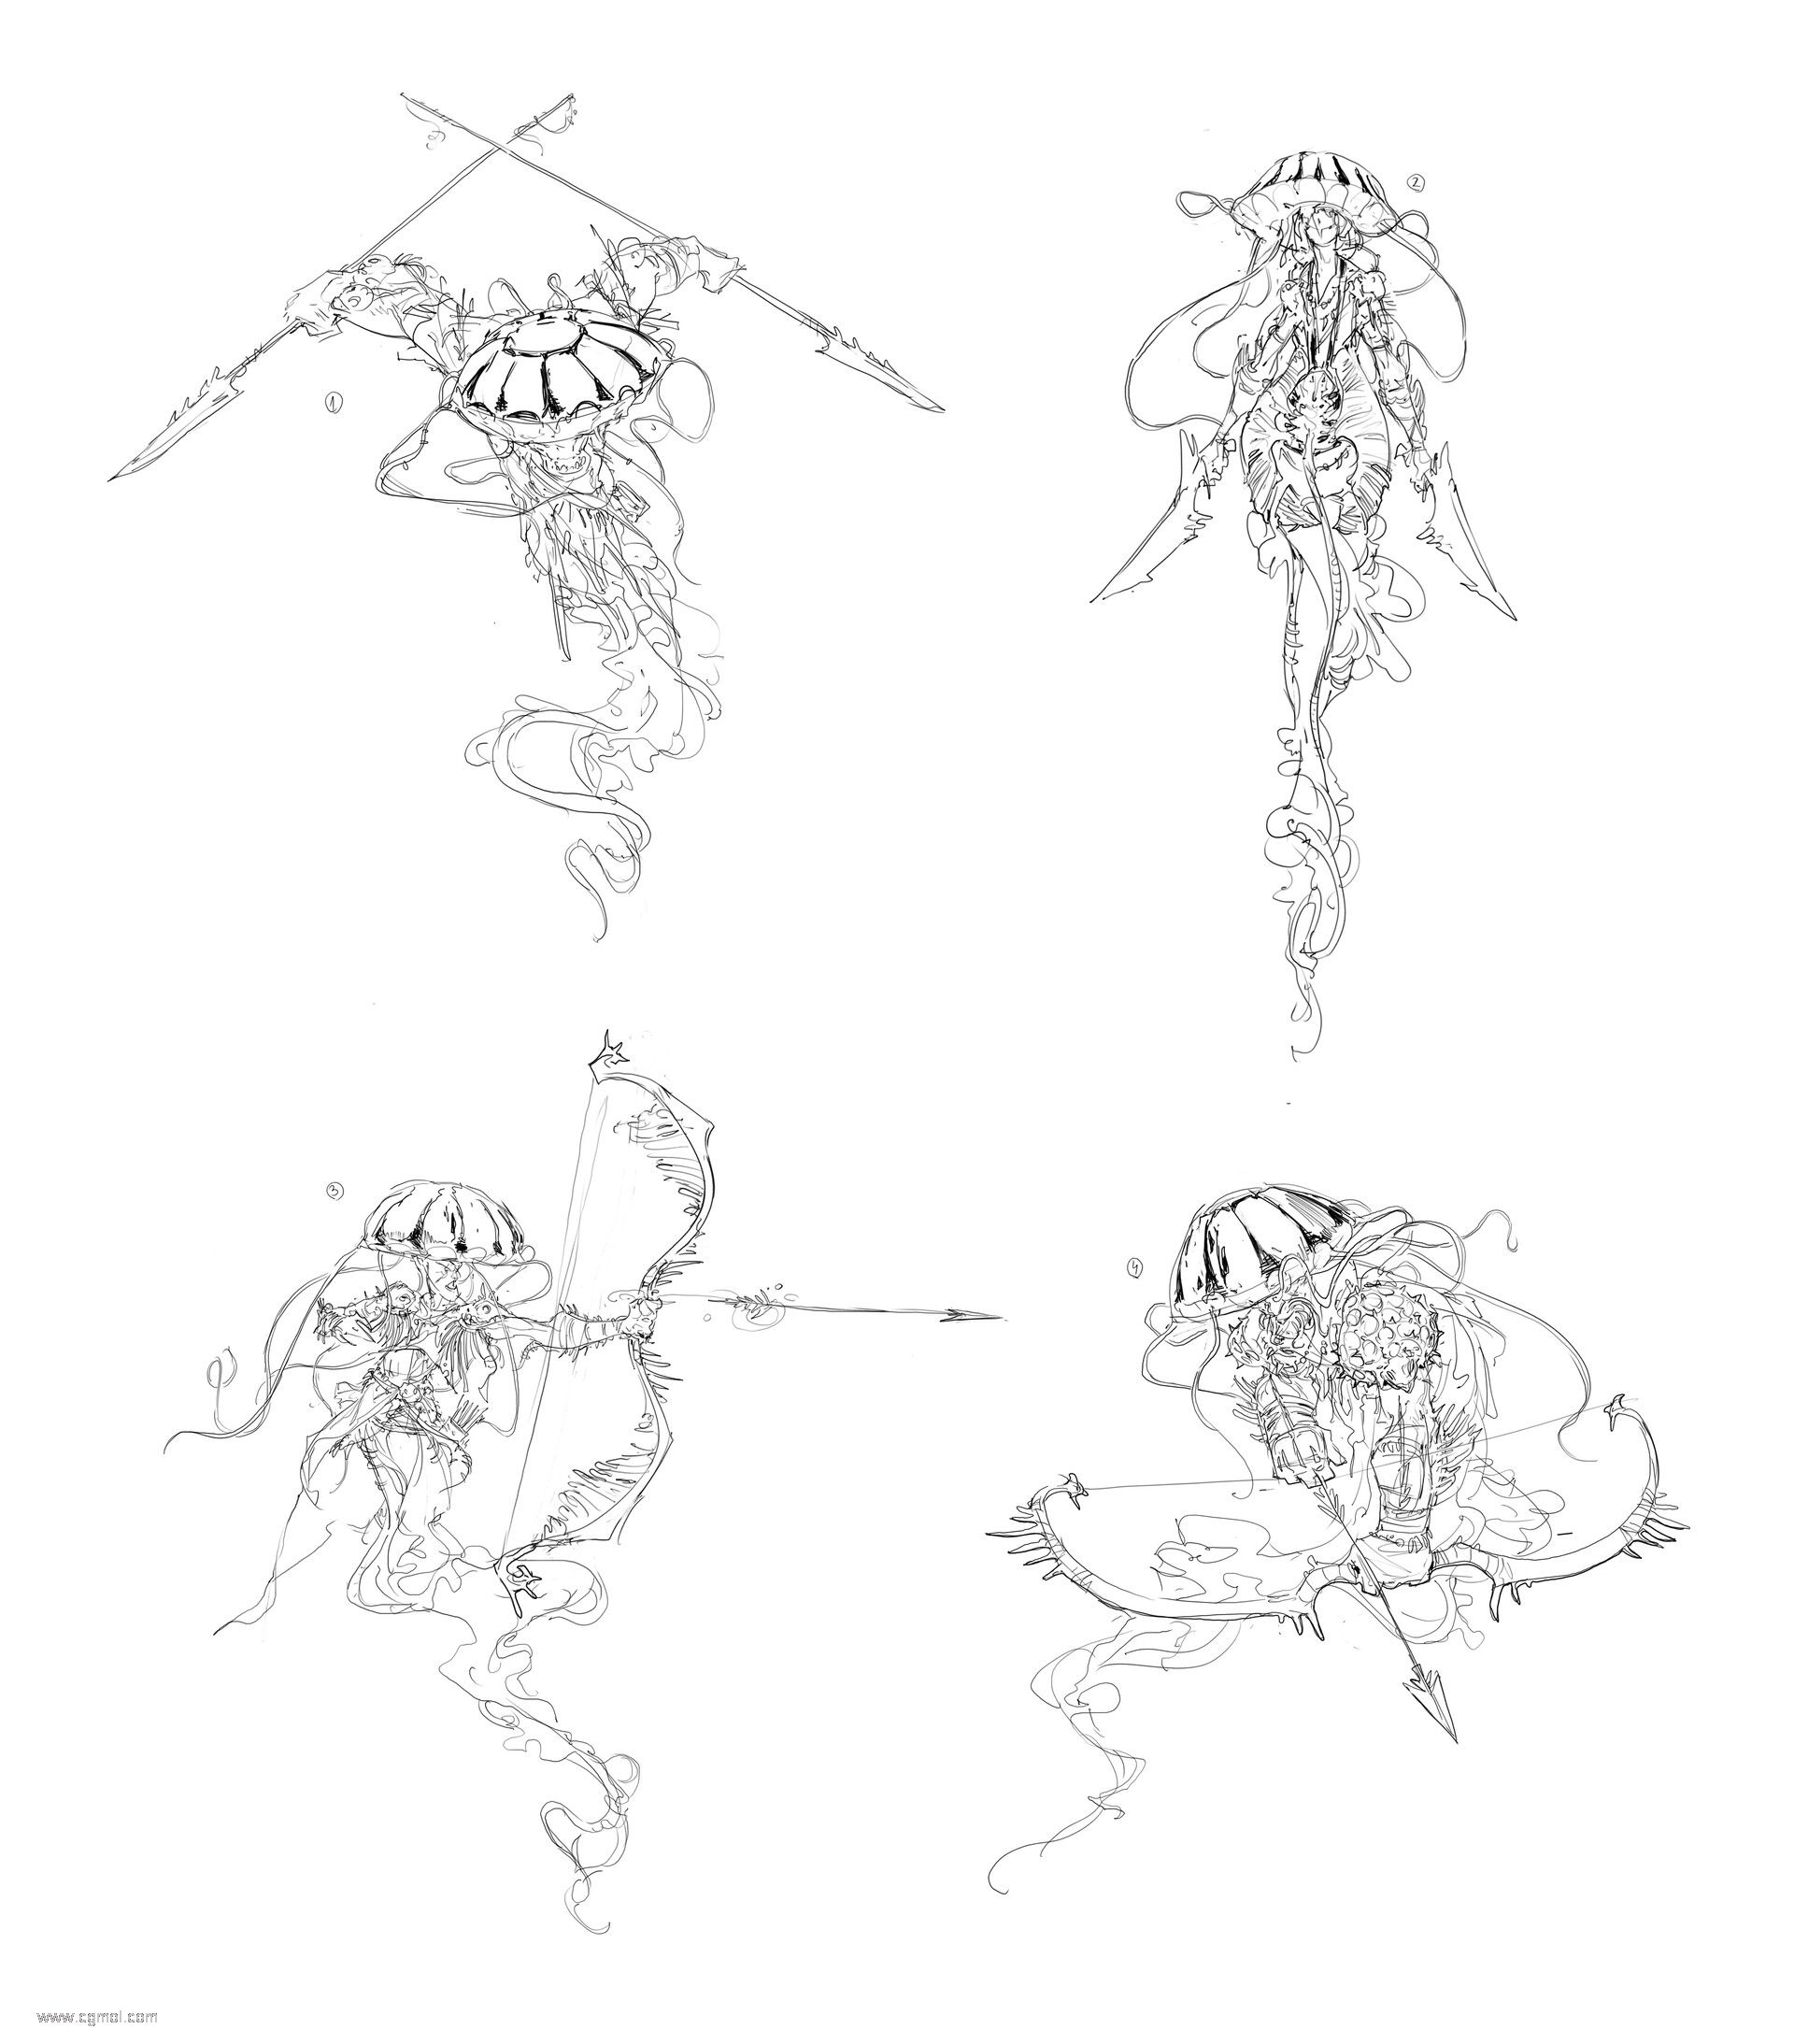 ognjen-sporin-jellyfish-hunter-sketches